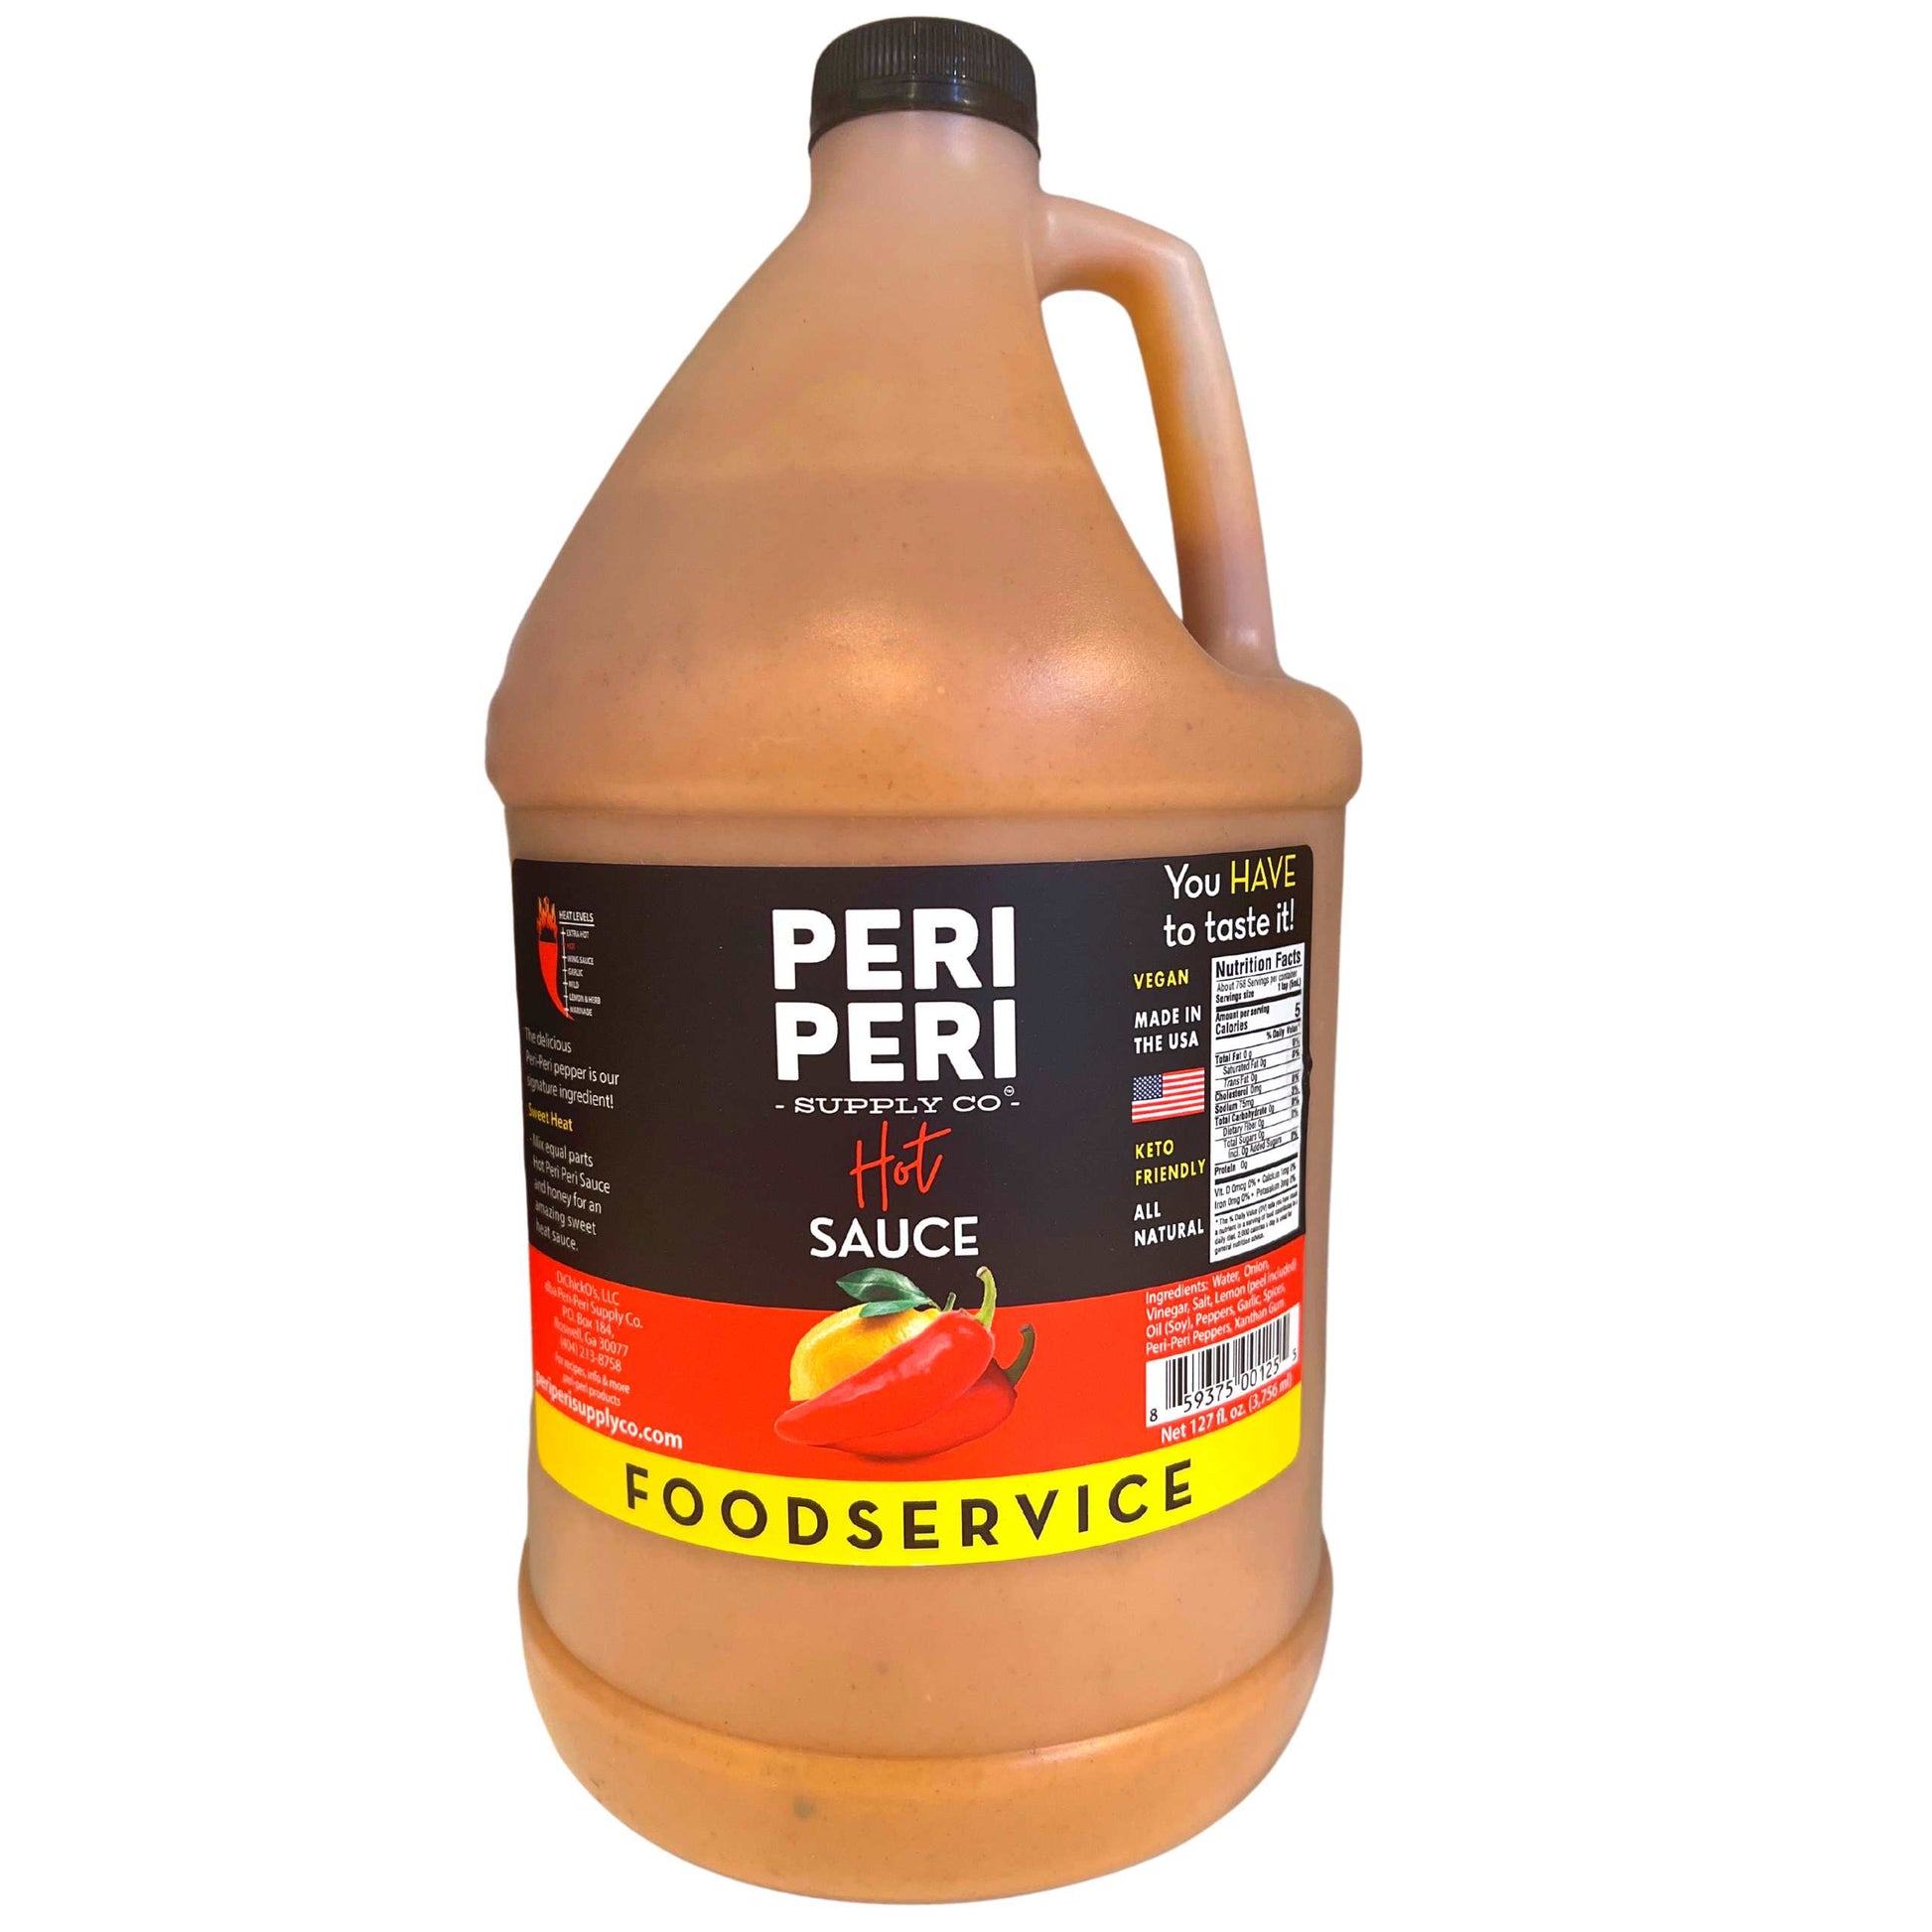 Hot Peri Peri sauce - The Peri Peri Standard - Wholesale 4 Gallons per case, Vegan, Gluten Free, Sugar Free, Made in America, Keto and Paleo Friendly